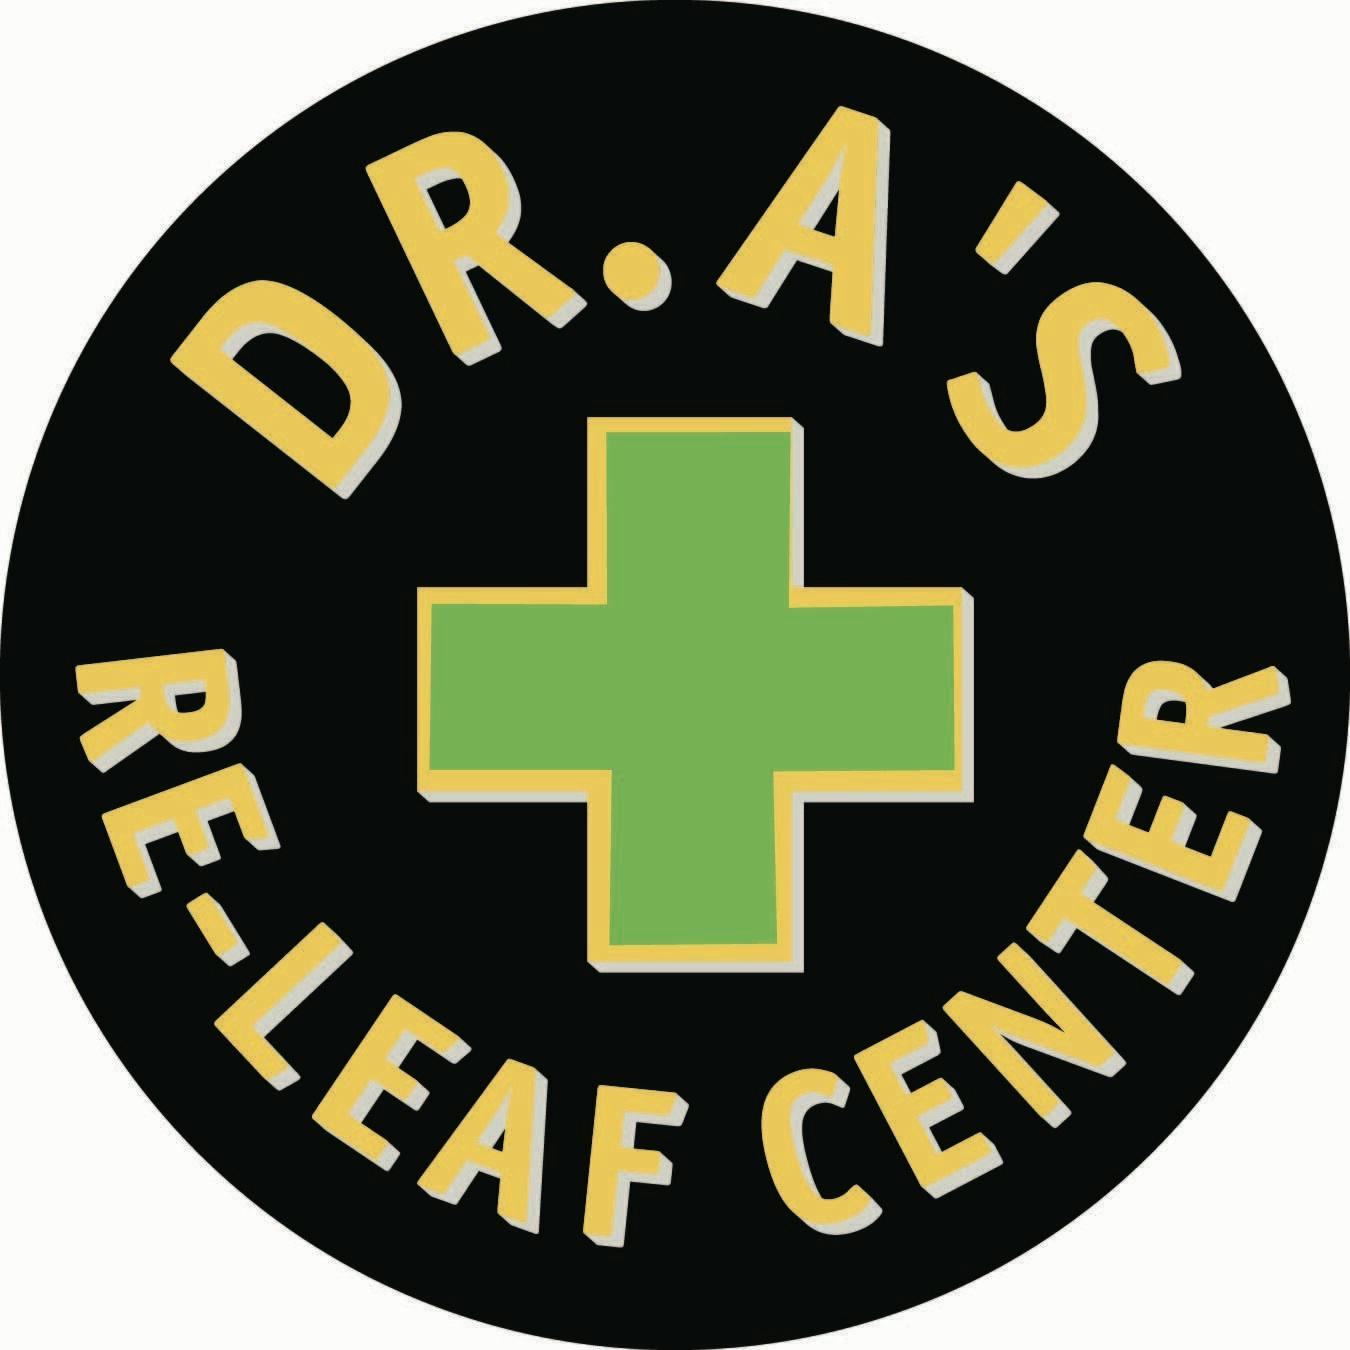 Dr. A's Re-Leaf Center - Edwardsburg Cannabis Dispensary